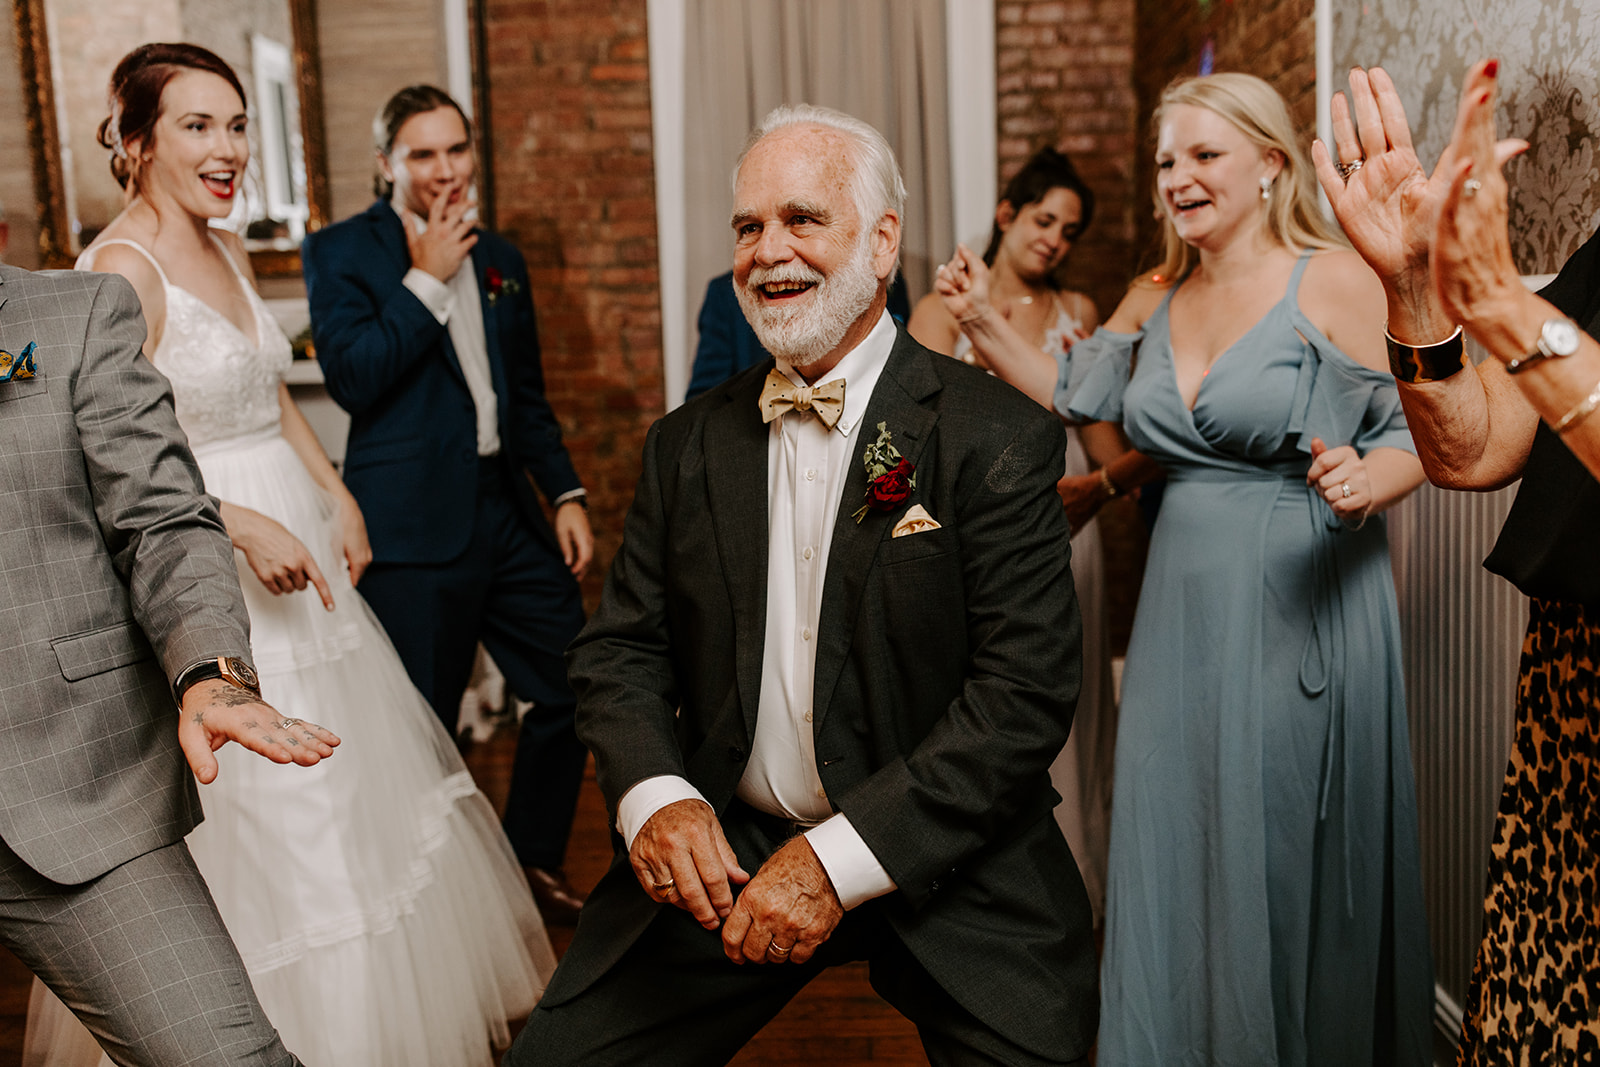 Dancing wedding photography | Nashville Bride Guide